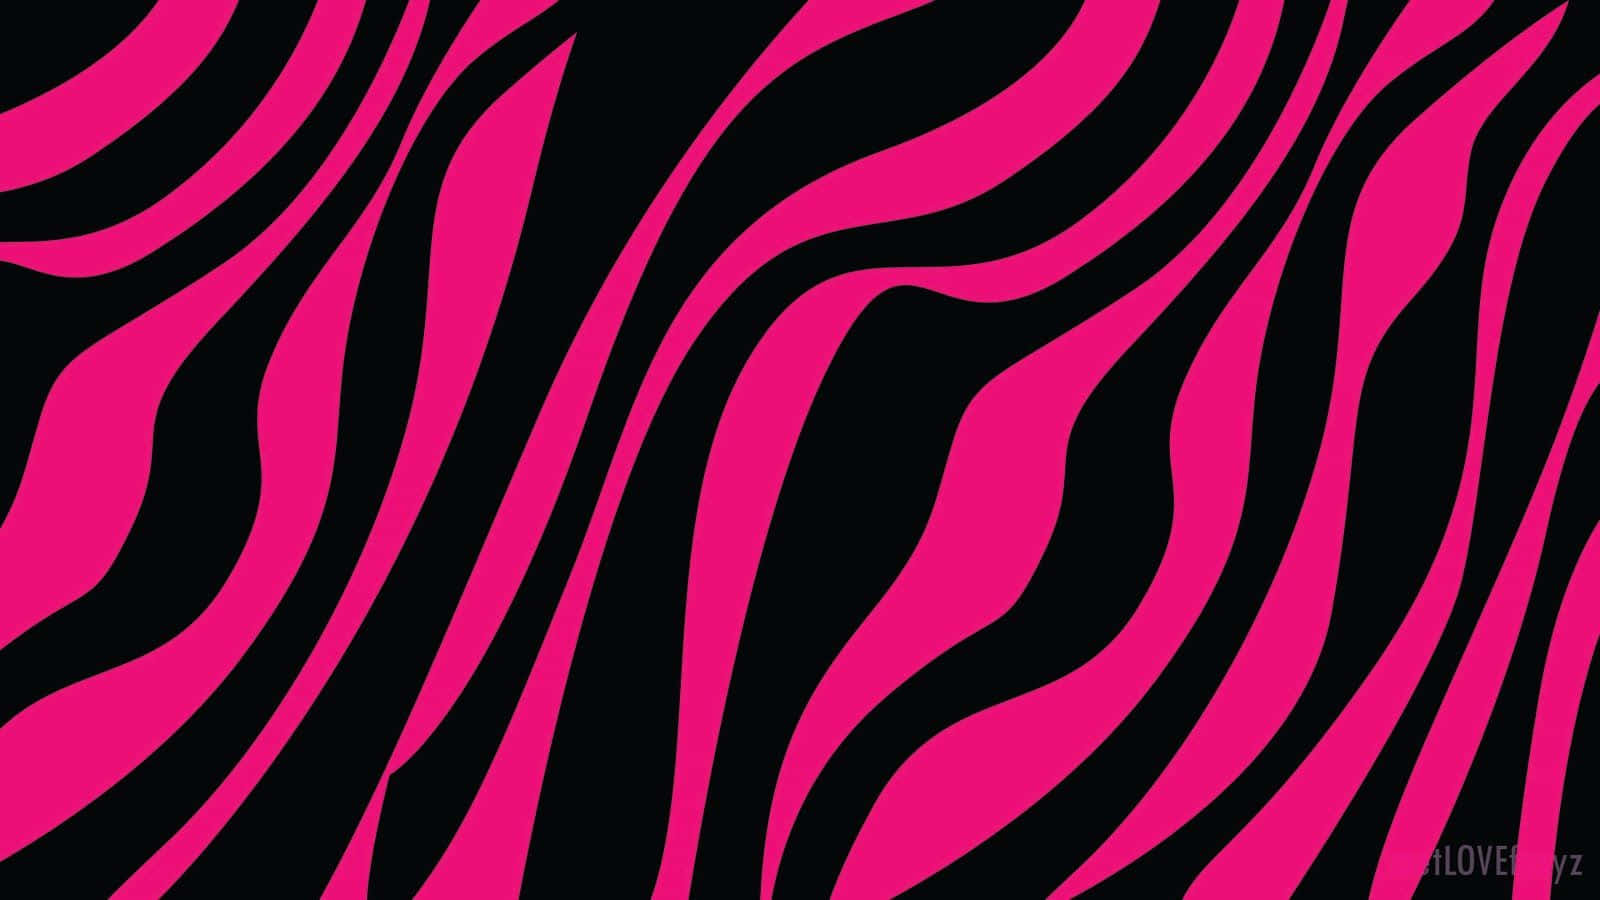 A Pink And Black Zebra Print Wallpaper